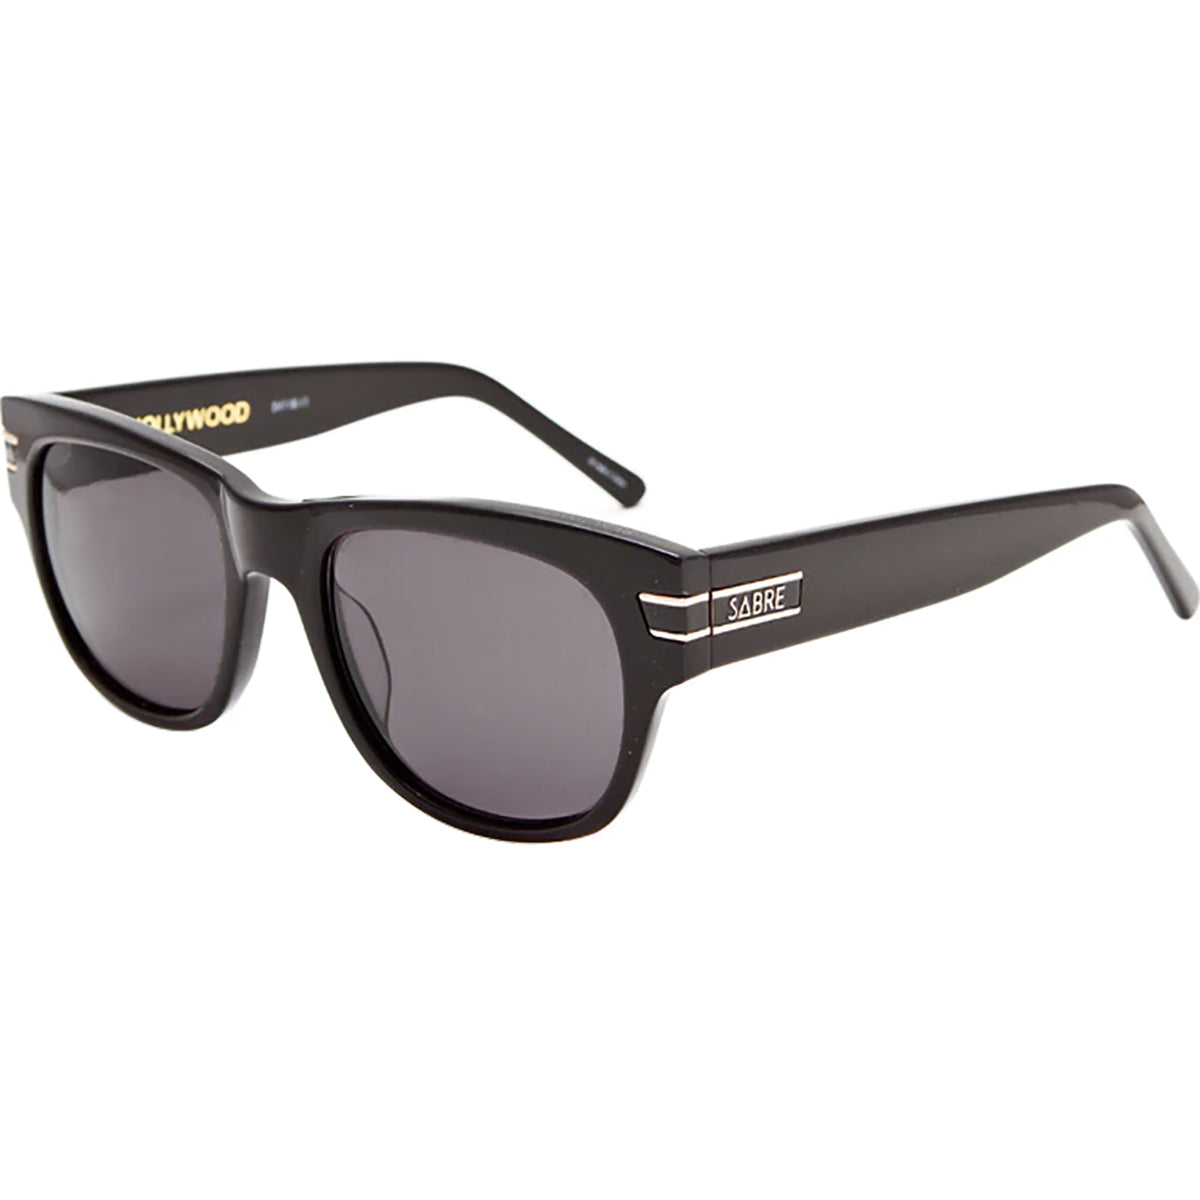 Sabre Hollywood Adult Lifestyle Sunglasses-SV118